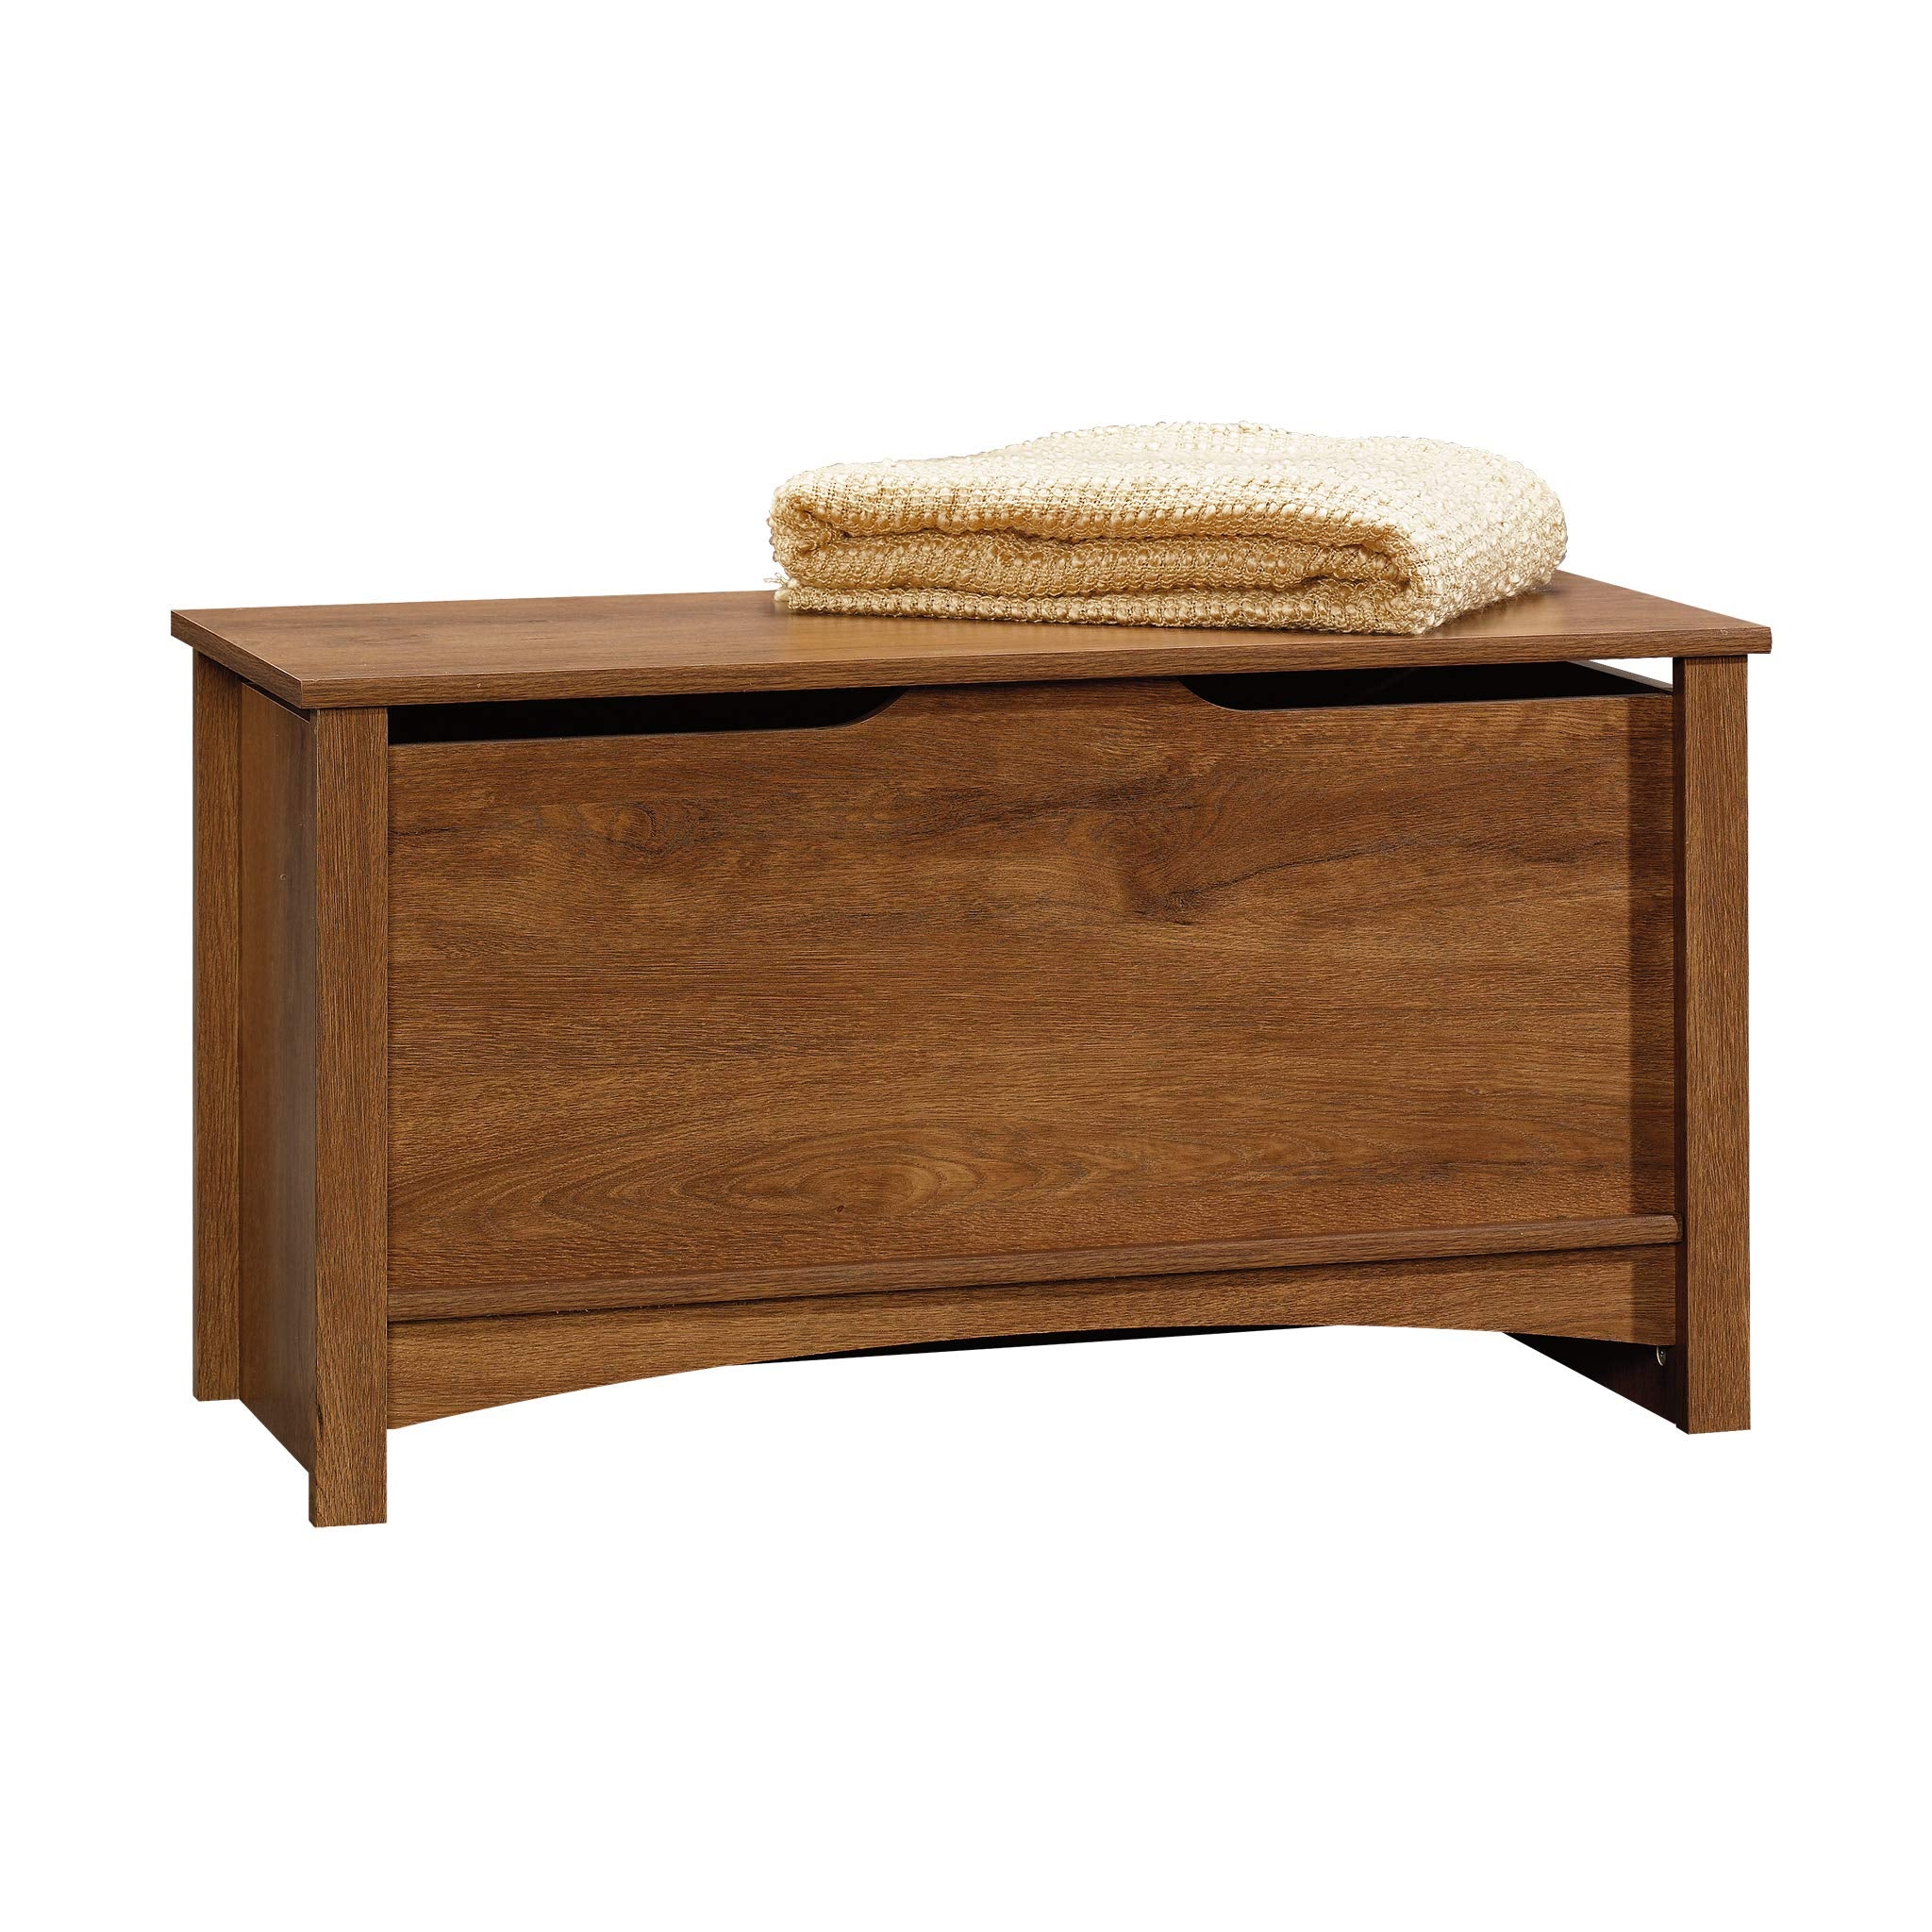 Sauder Shoal Creek Dresser (L: 60.0" x W: 16.73" x H: 35.04") and Storage Chest Bundle, Oiled Oak Finish